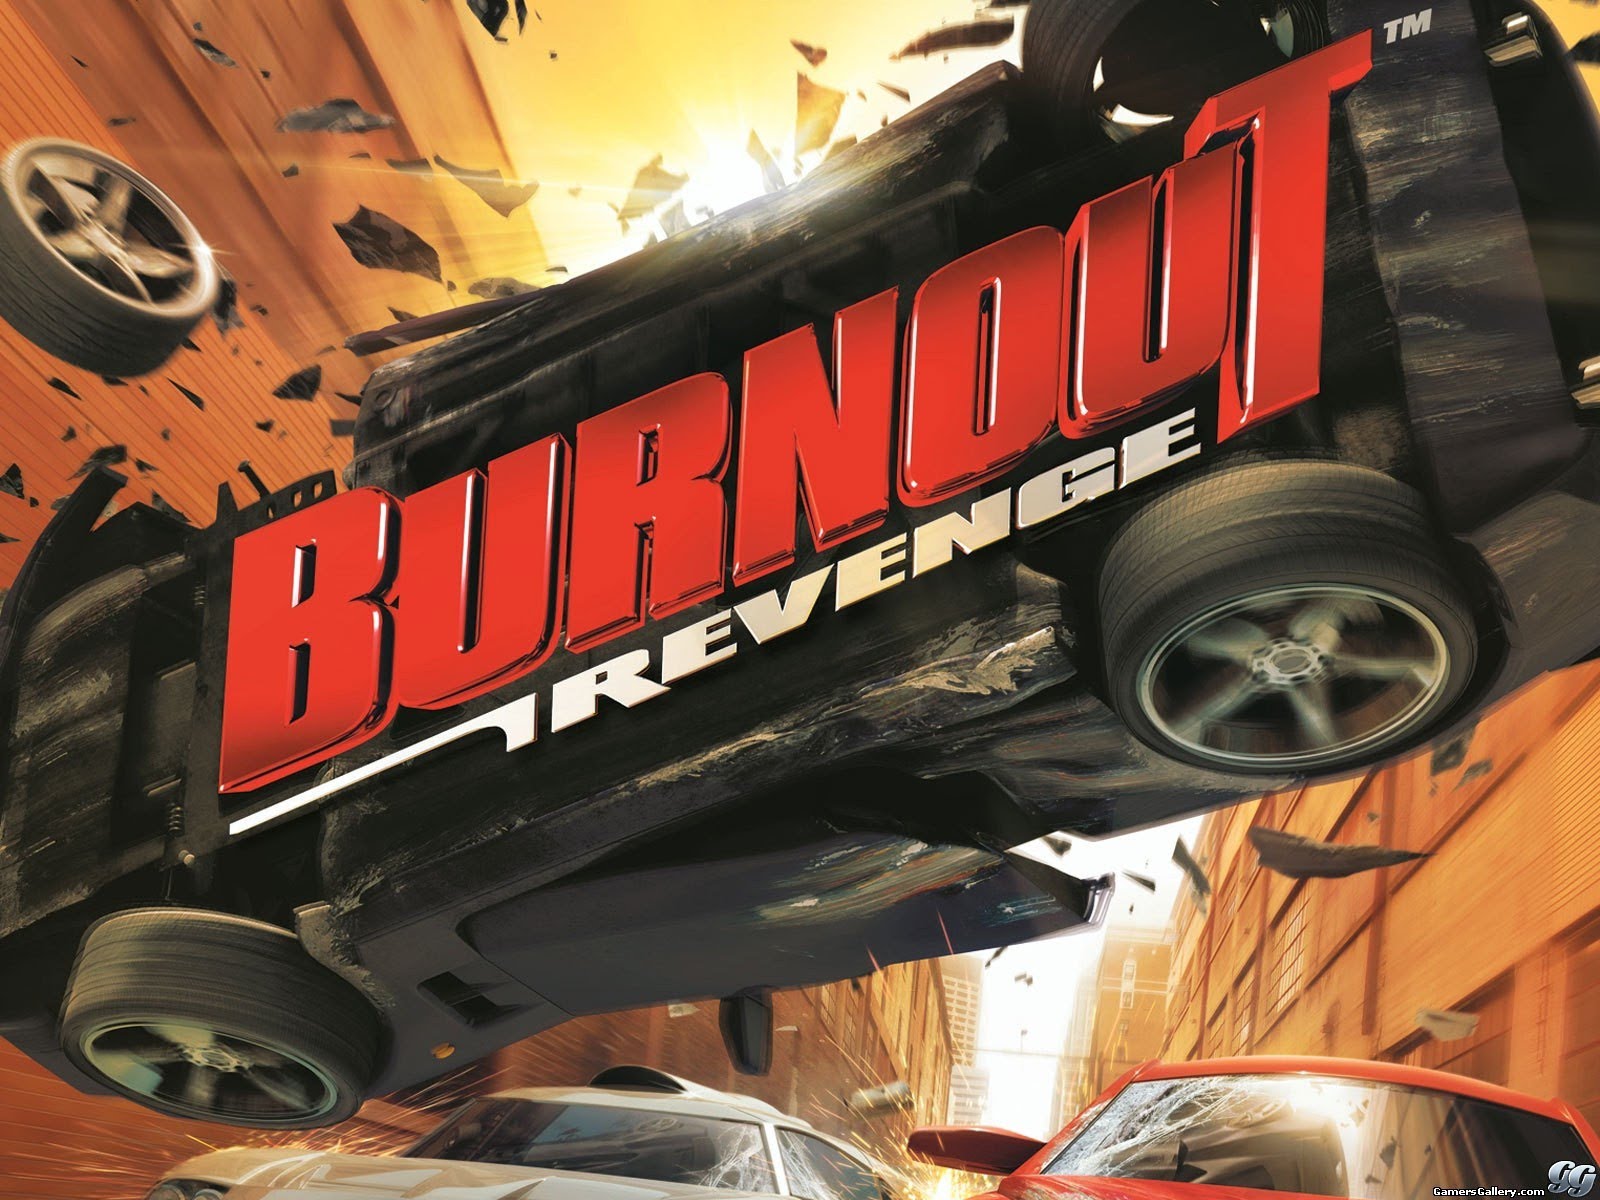 burnout revenge download for pc